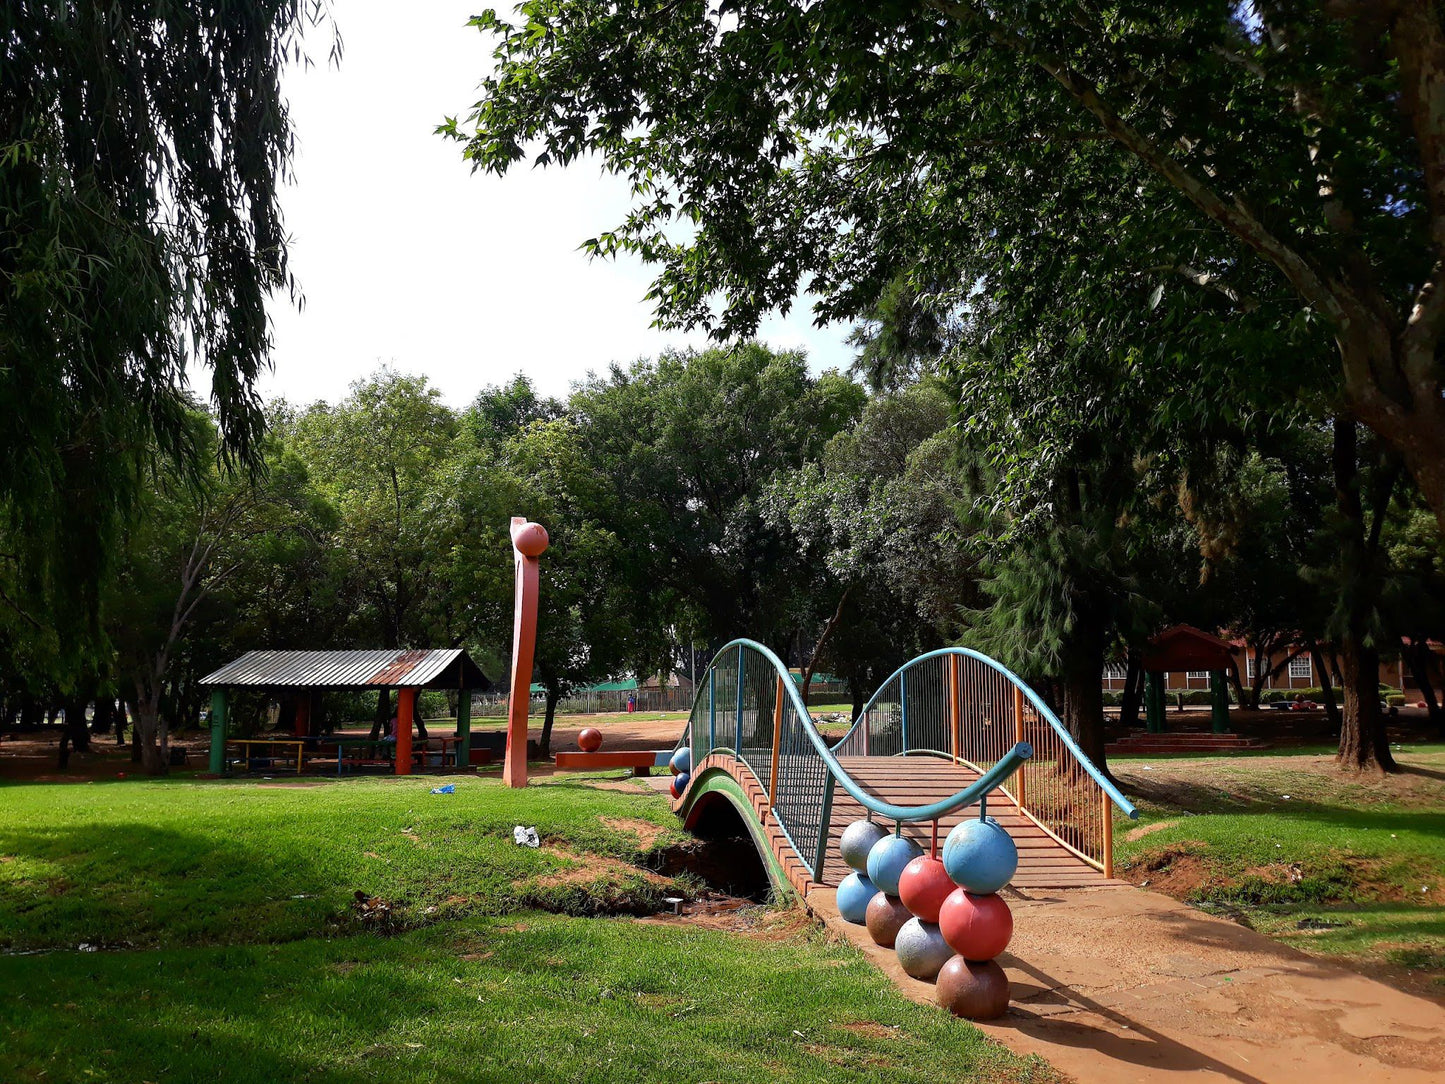  Dorothy Nyembe Park